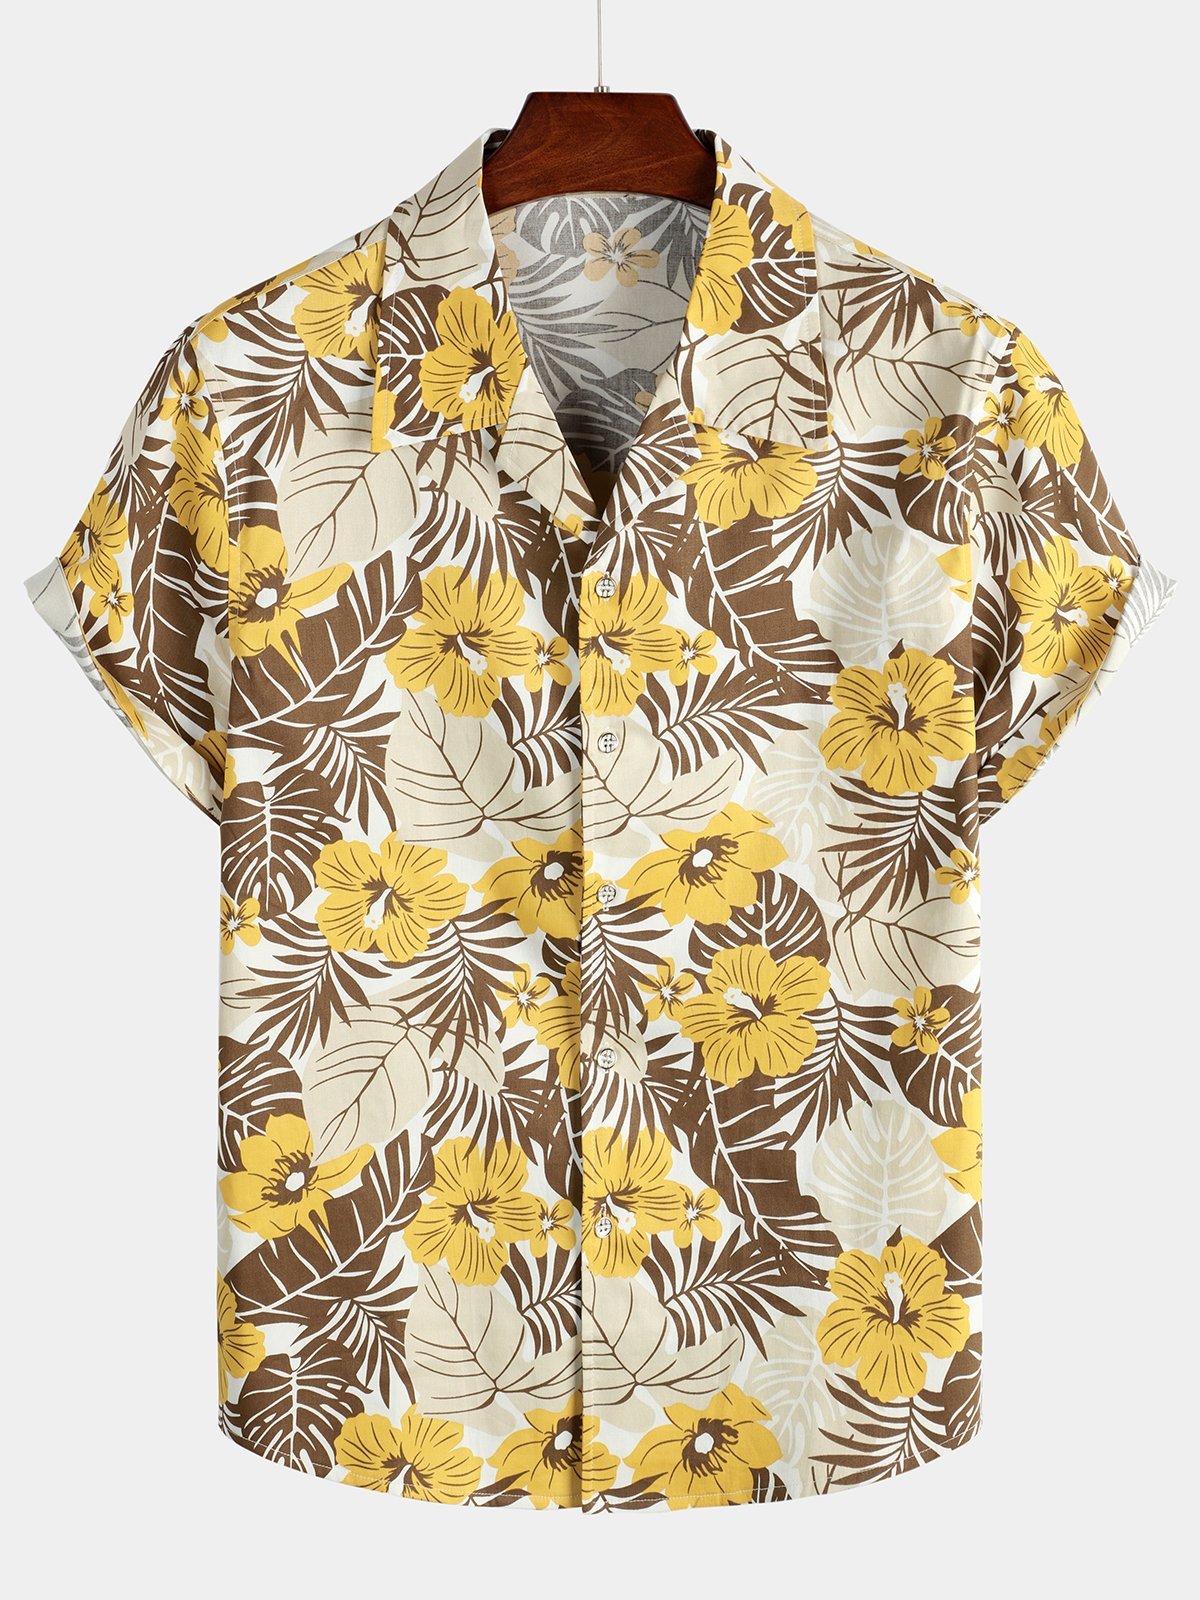 Men's Short Sleeve Floral Tropical Hawaiian Shirt